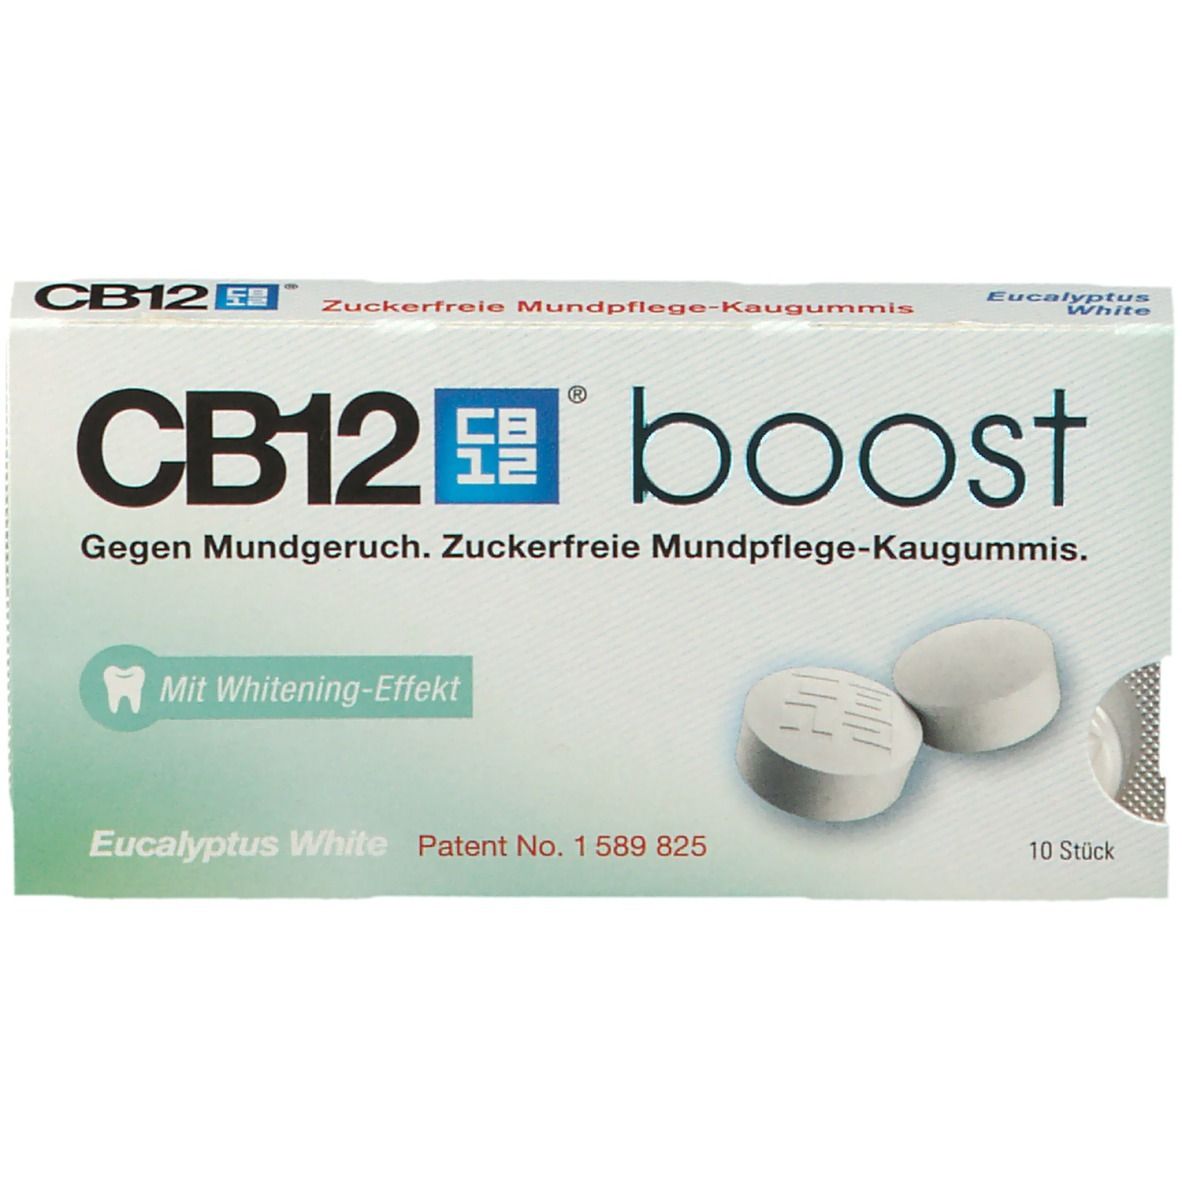 CB12® Boost  Kaugummi Eukalyptus White